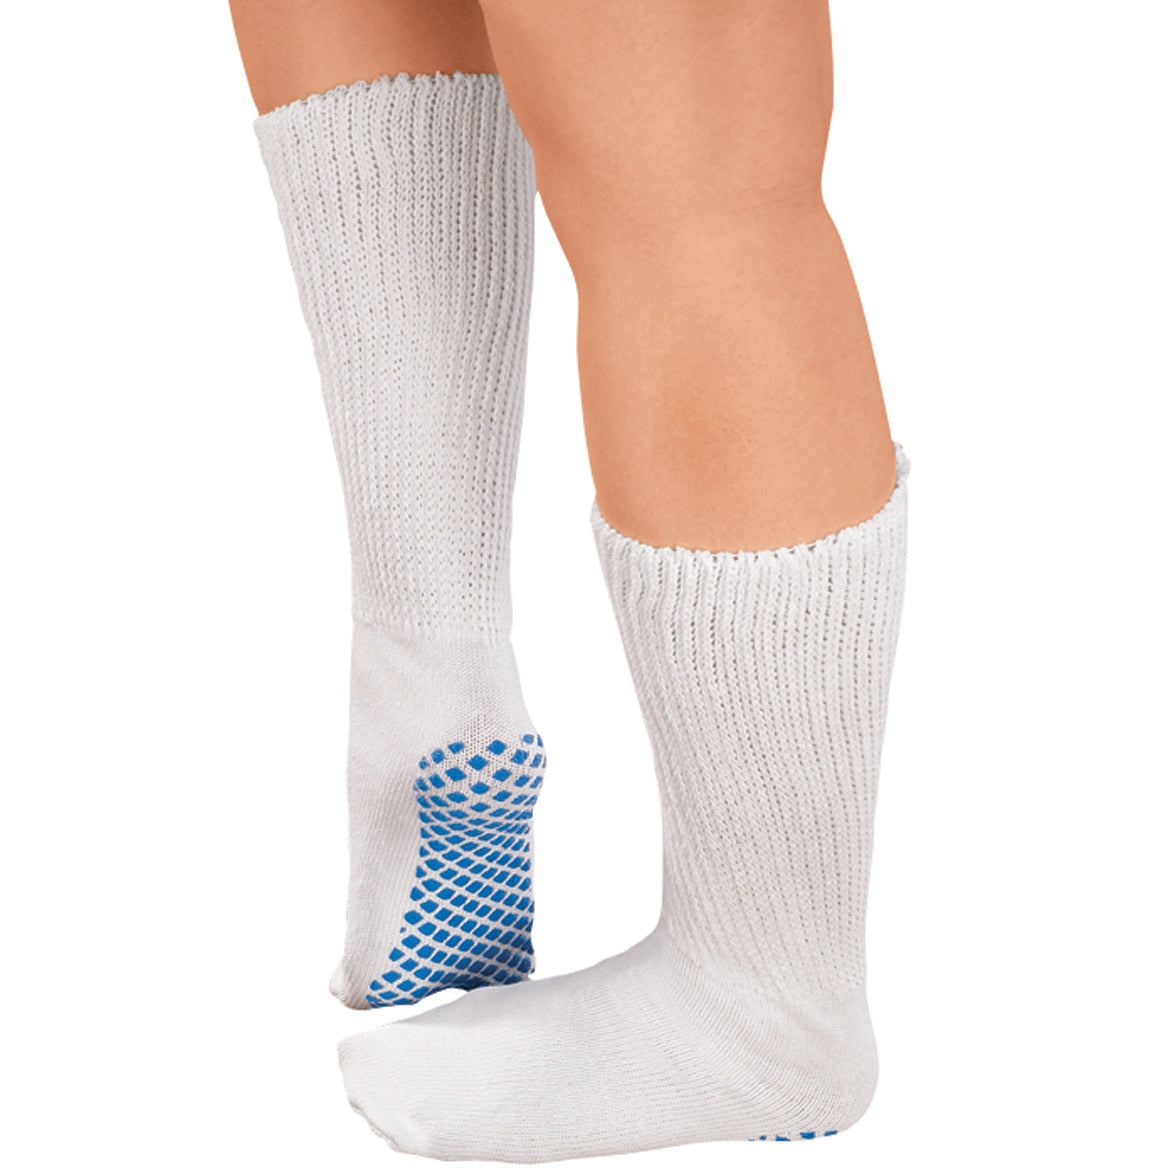 Mens Diabetic Slipper Socks with Gripper Soles